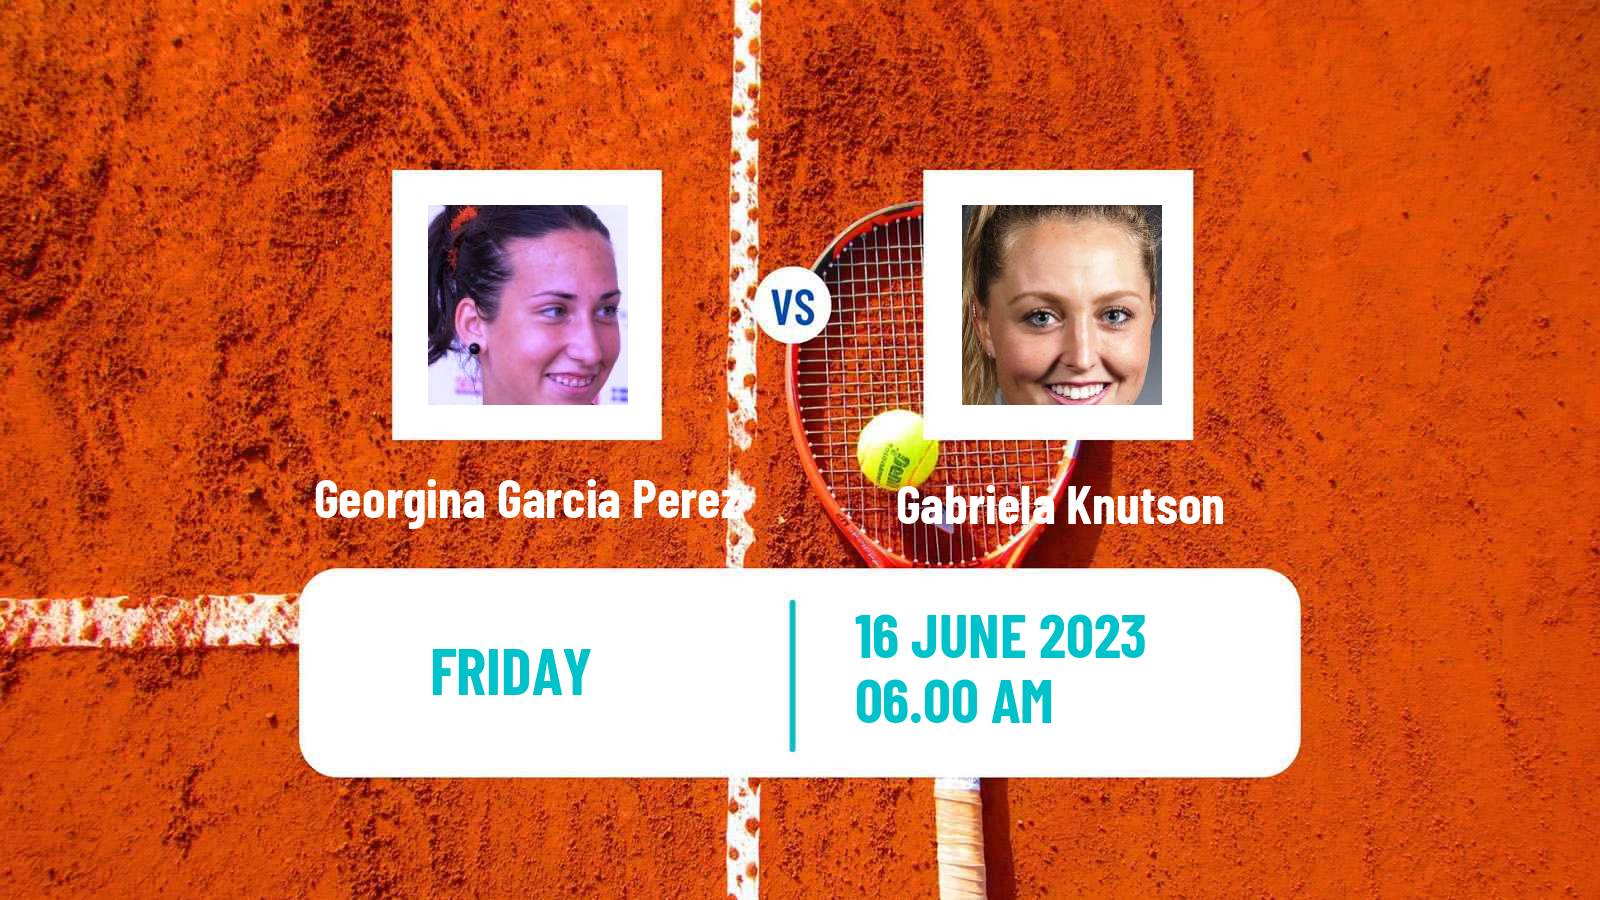 Tennis ITF W25 Guimaraes Women Georgina Garcia Perez - Gabriela Knutson